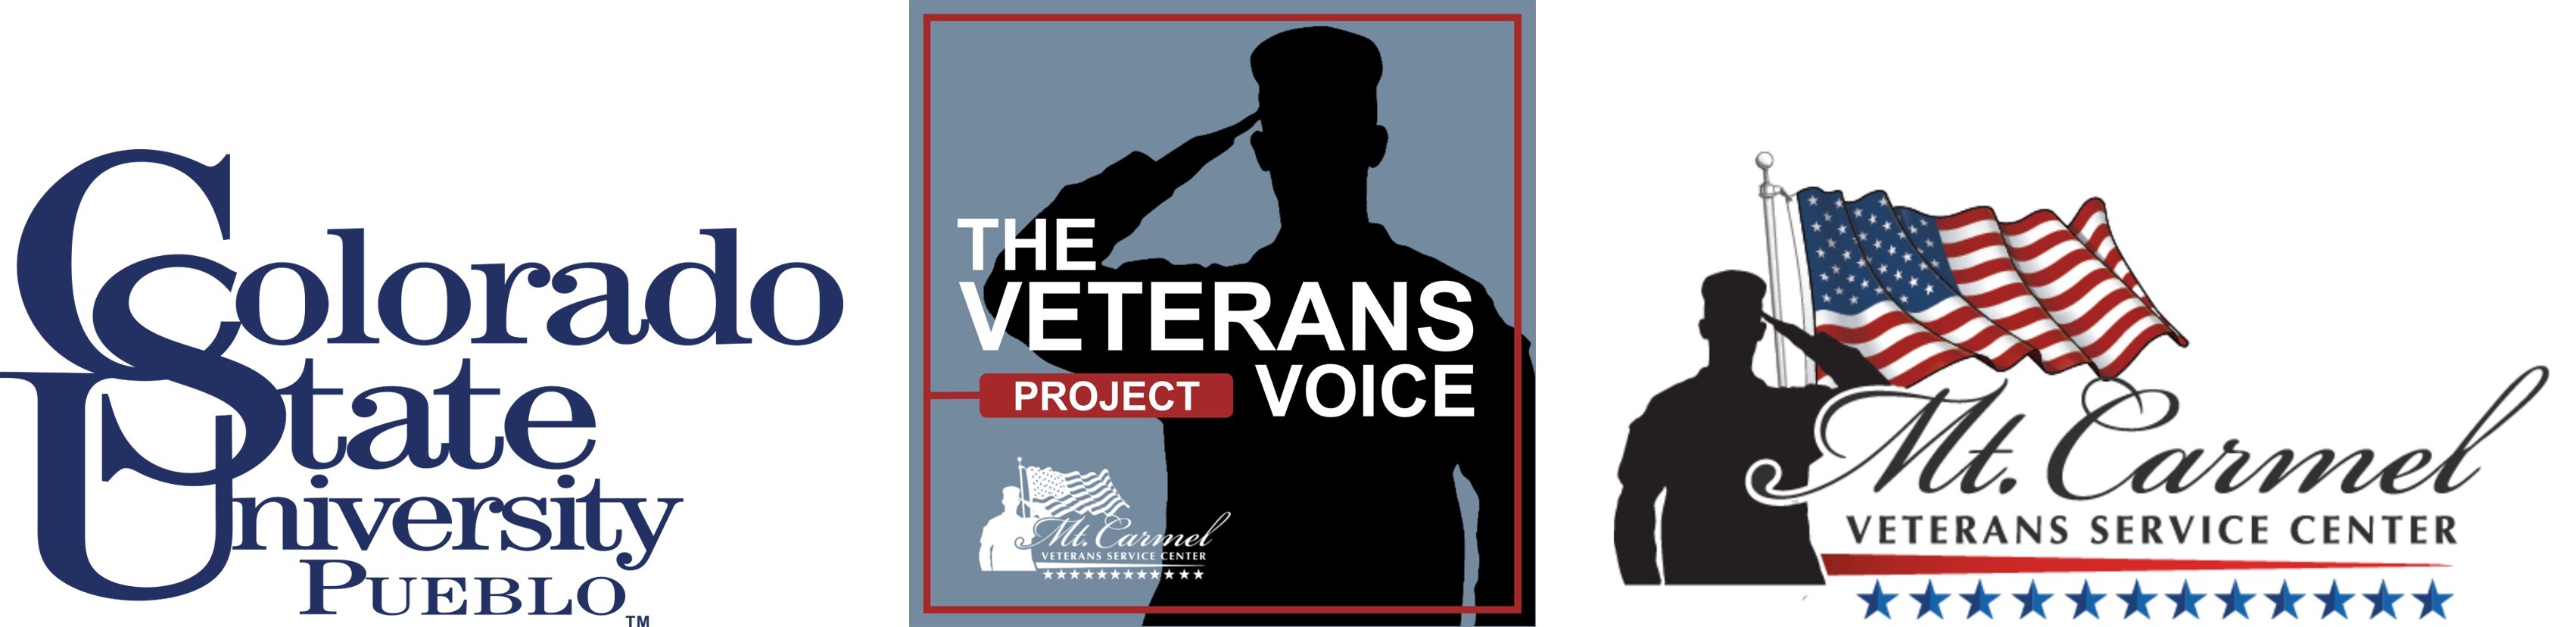 CSU_Pueblo_Veterans_Voice_Project8v62x.jpg